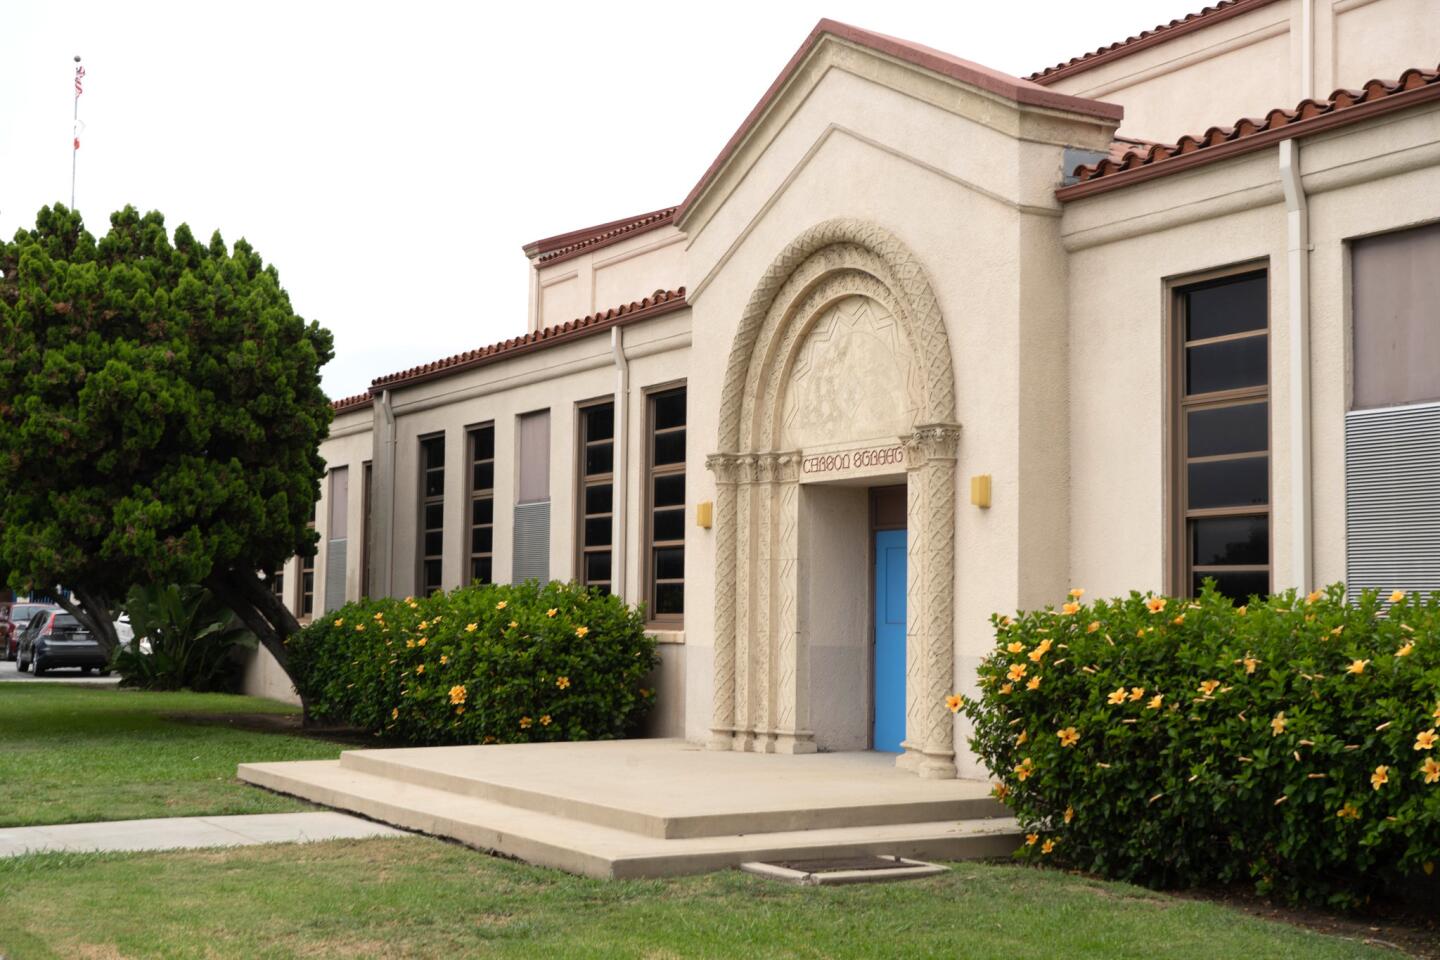 Carson Street Elementary